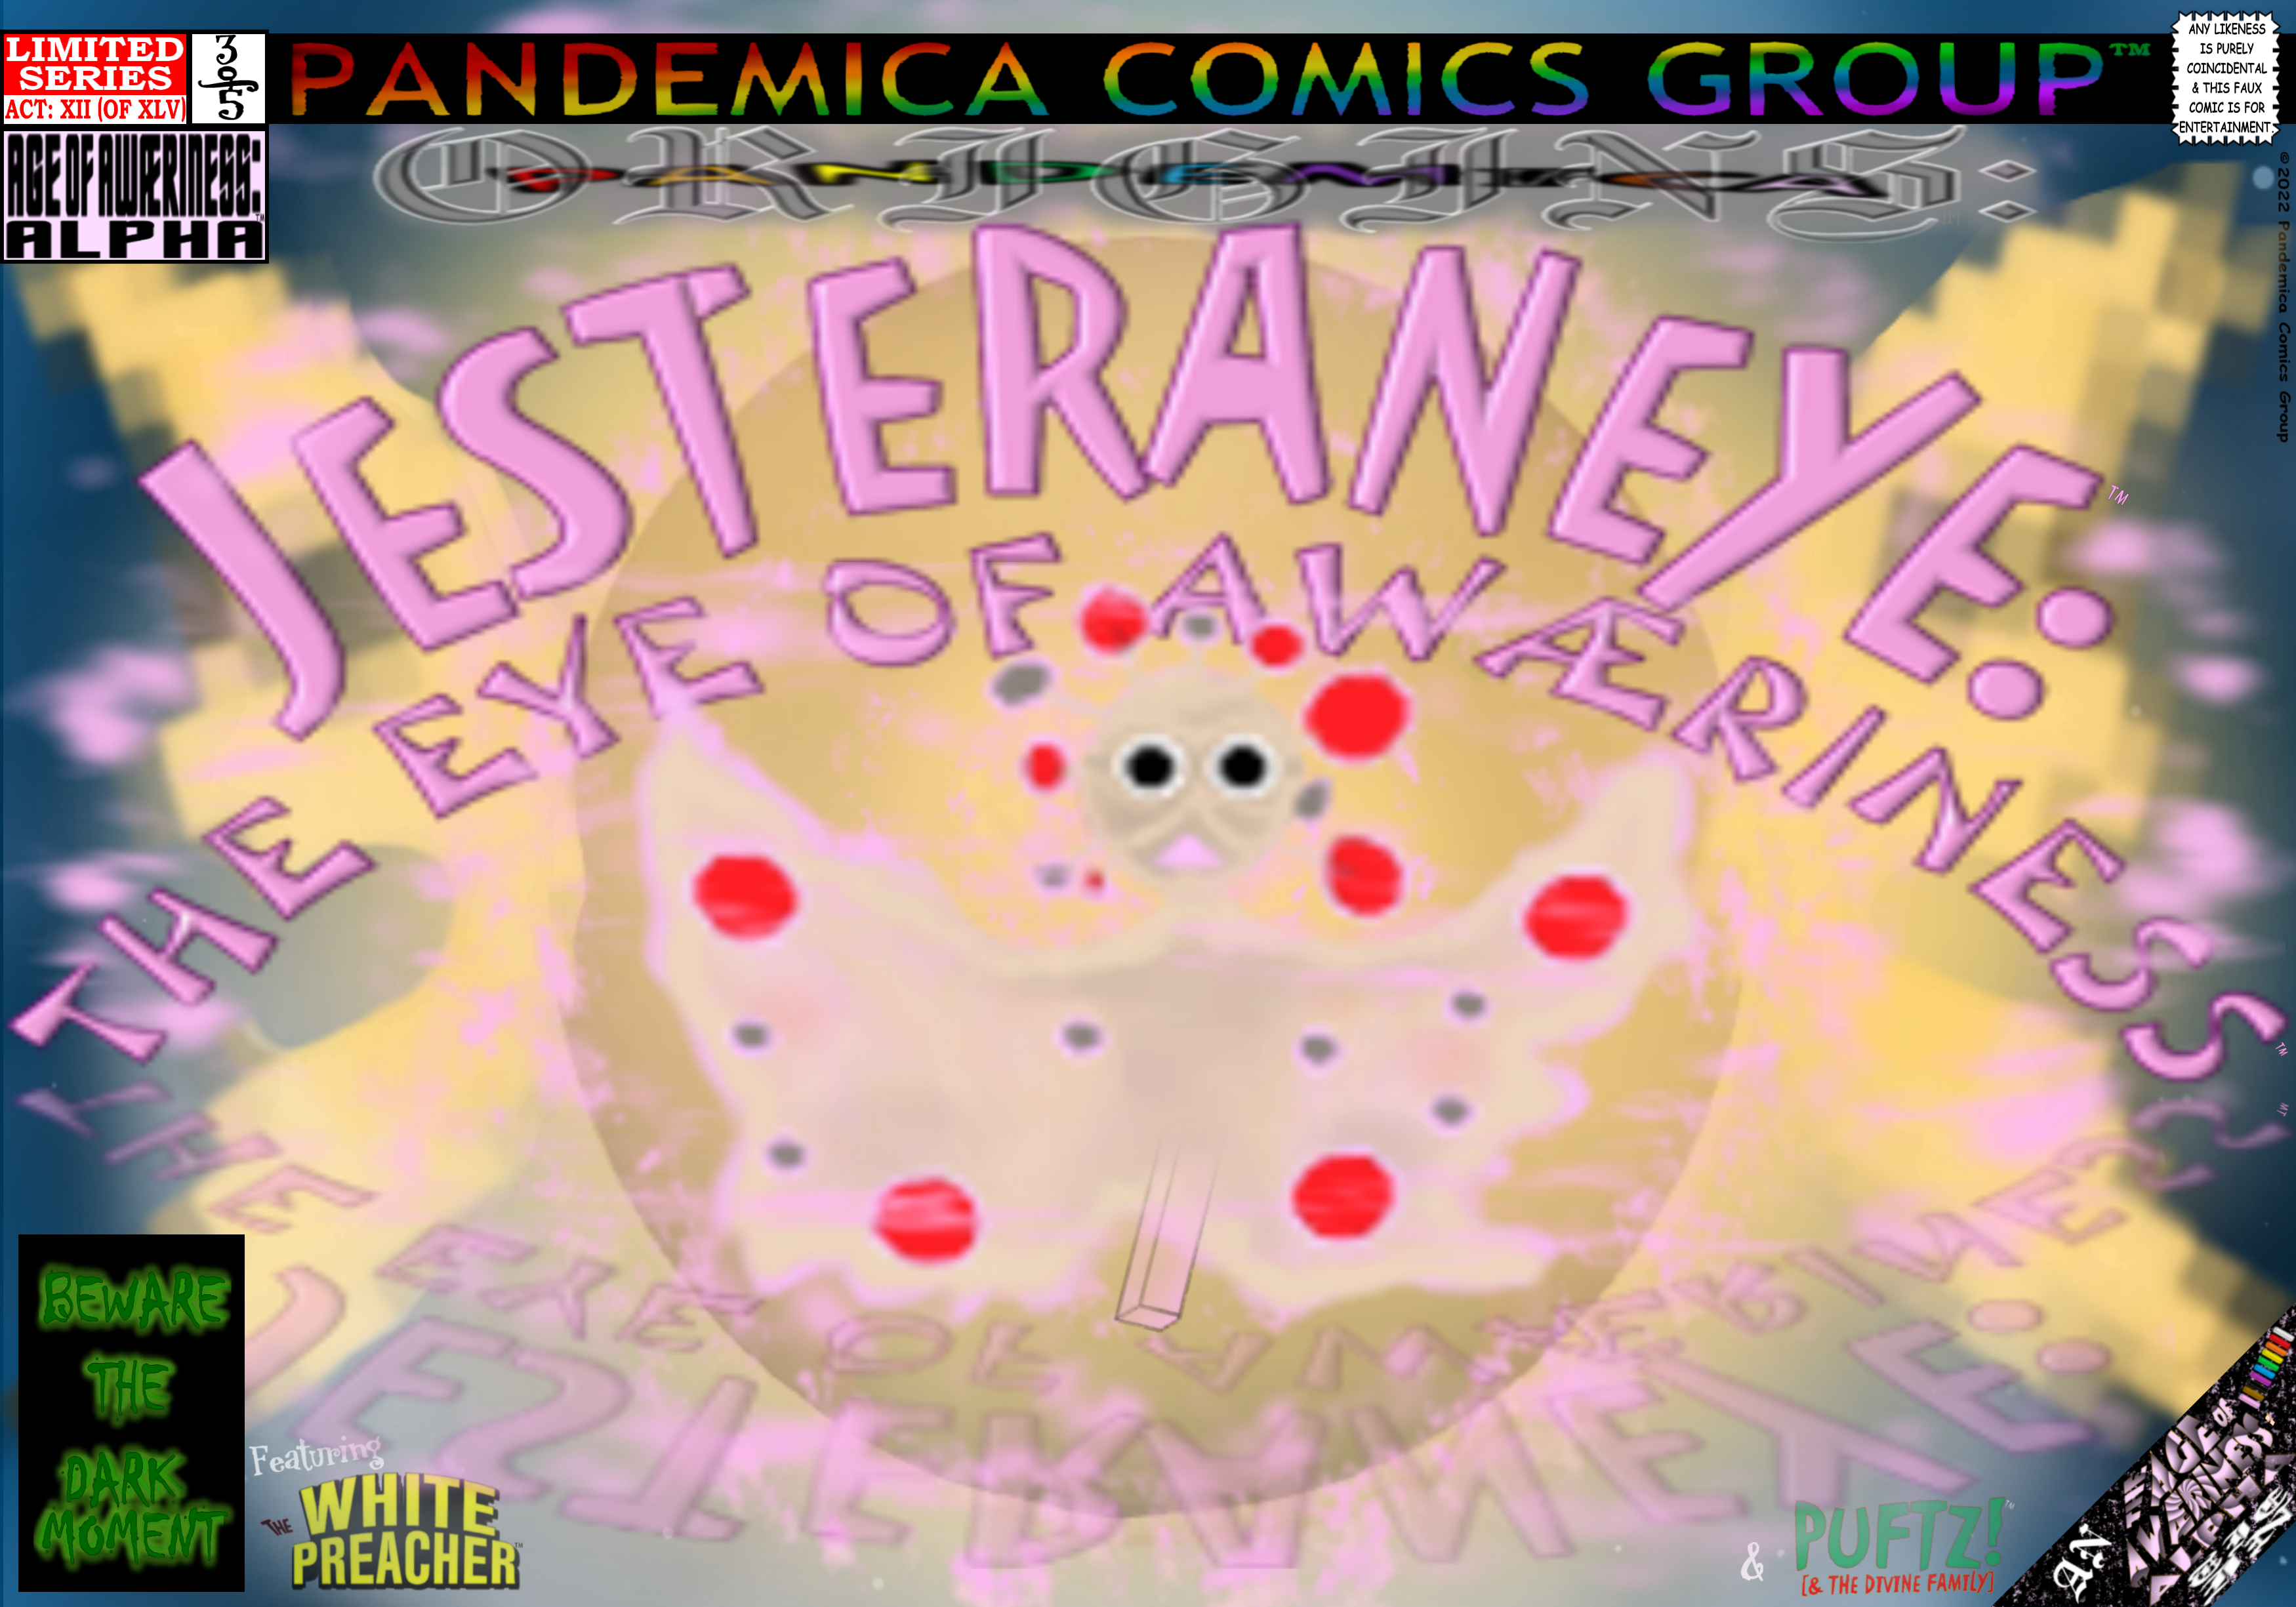 Pandemica Origins: Jesteraneye: The Eye of Awæriness